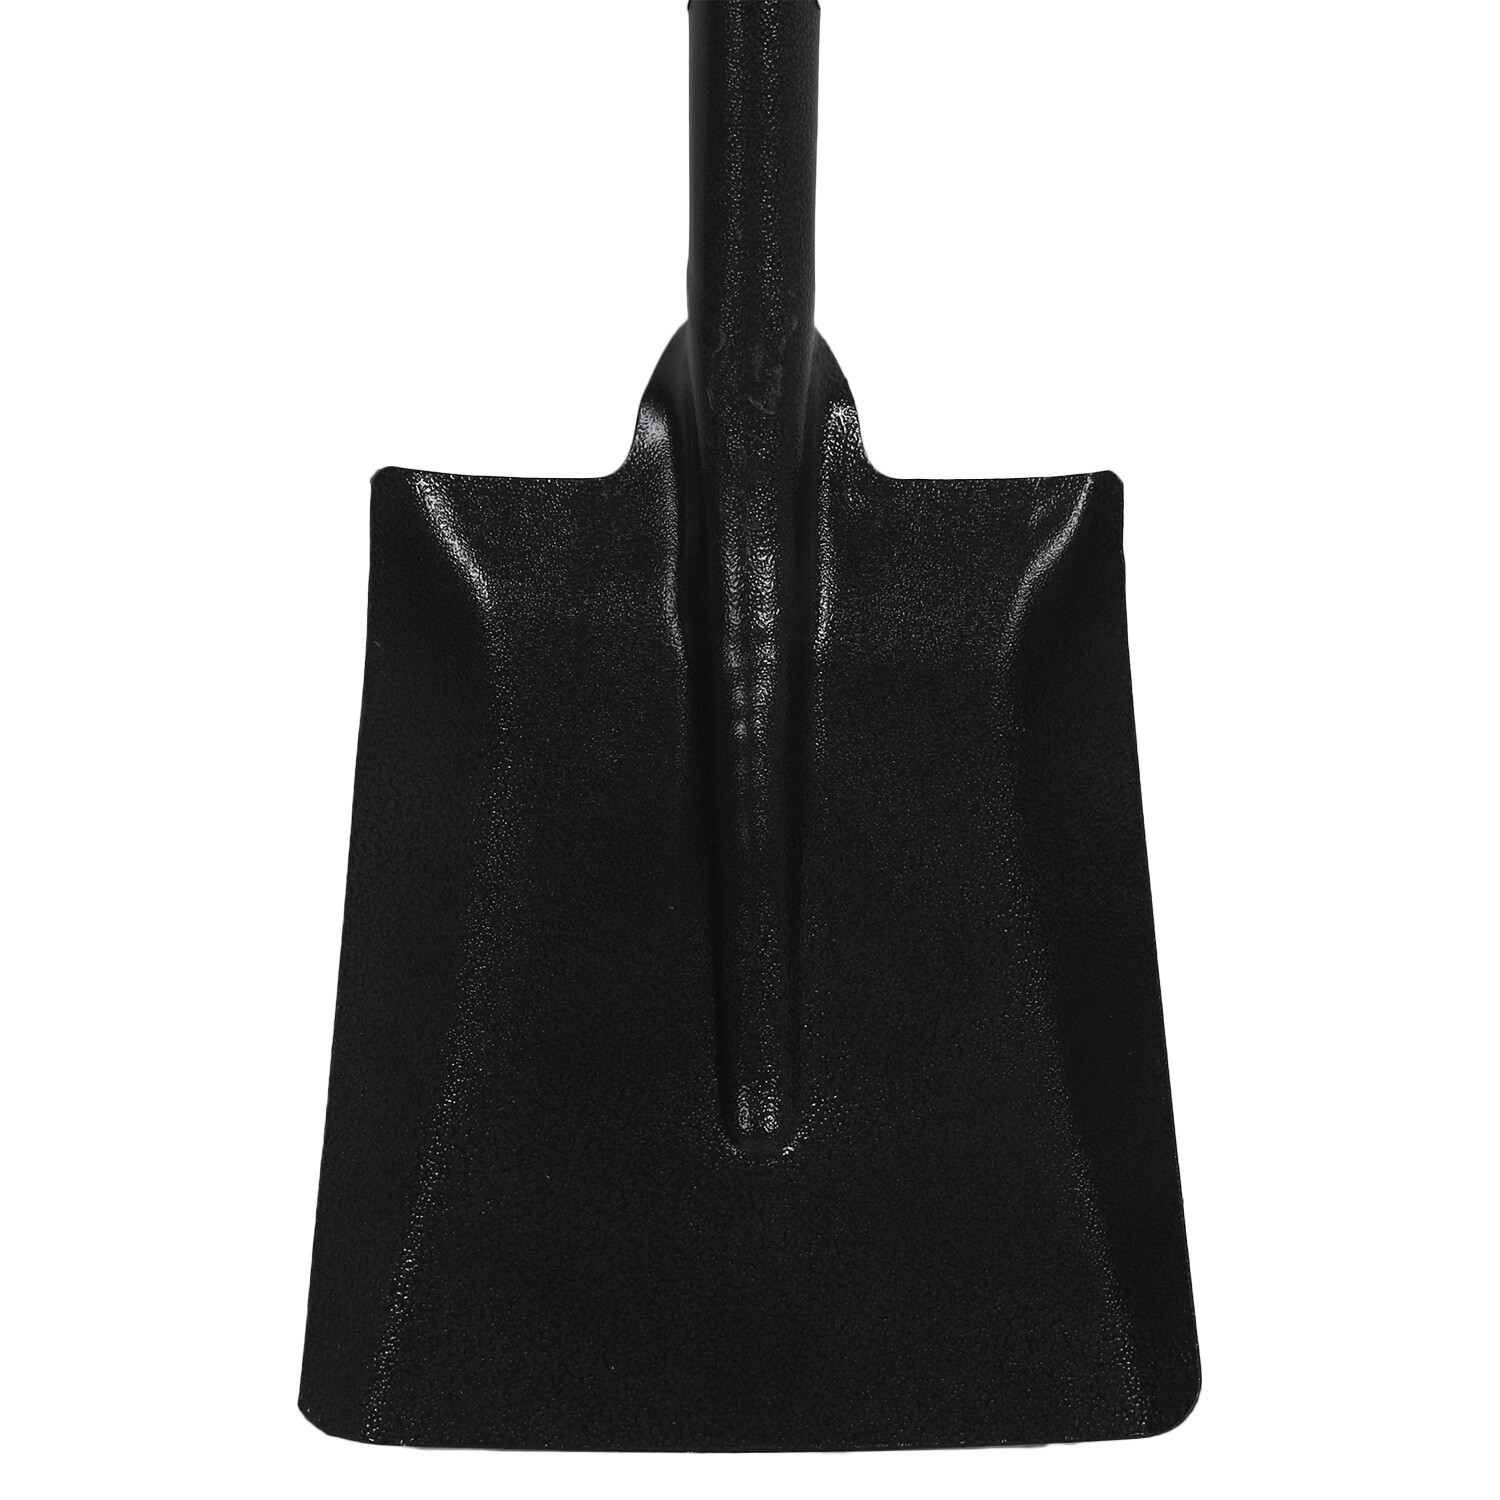 Square Mouth Carbon Steel Shovel Image 2